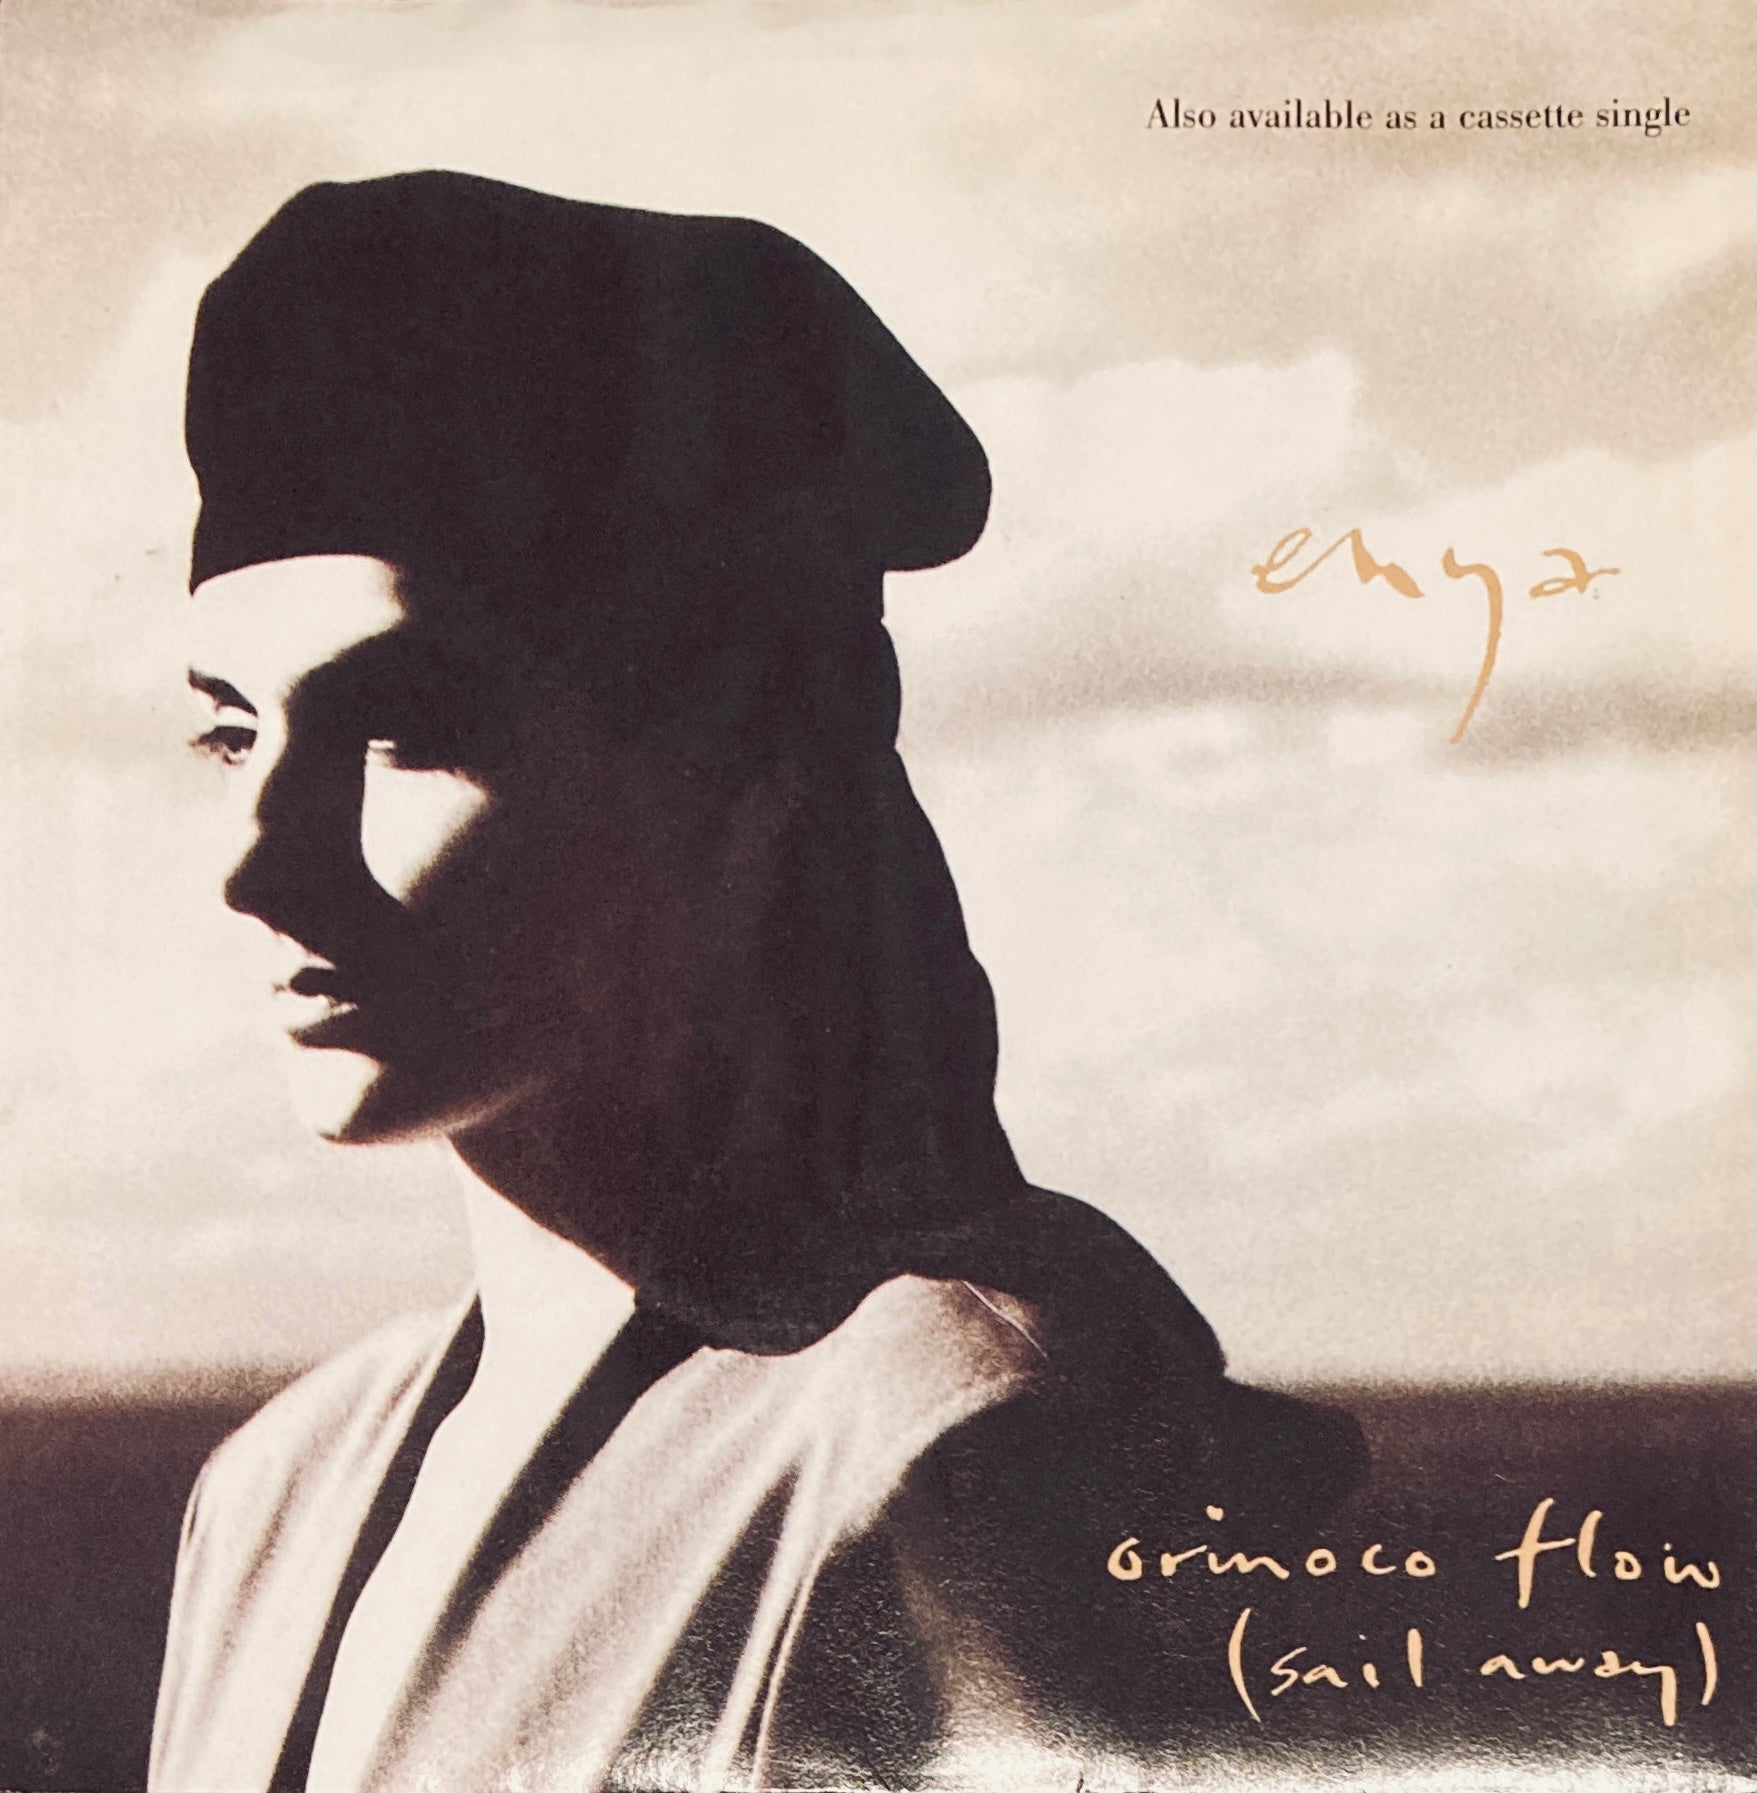 Enya "Orinoco Flow (Sail Away)" Single (1988)